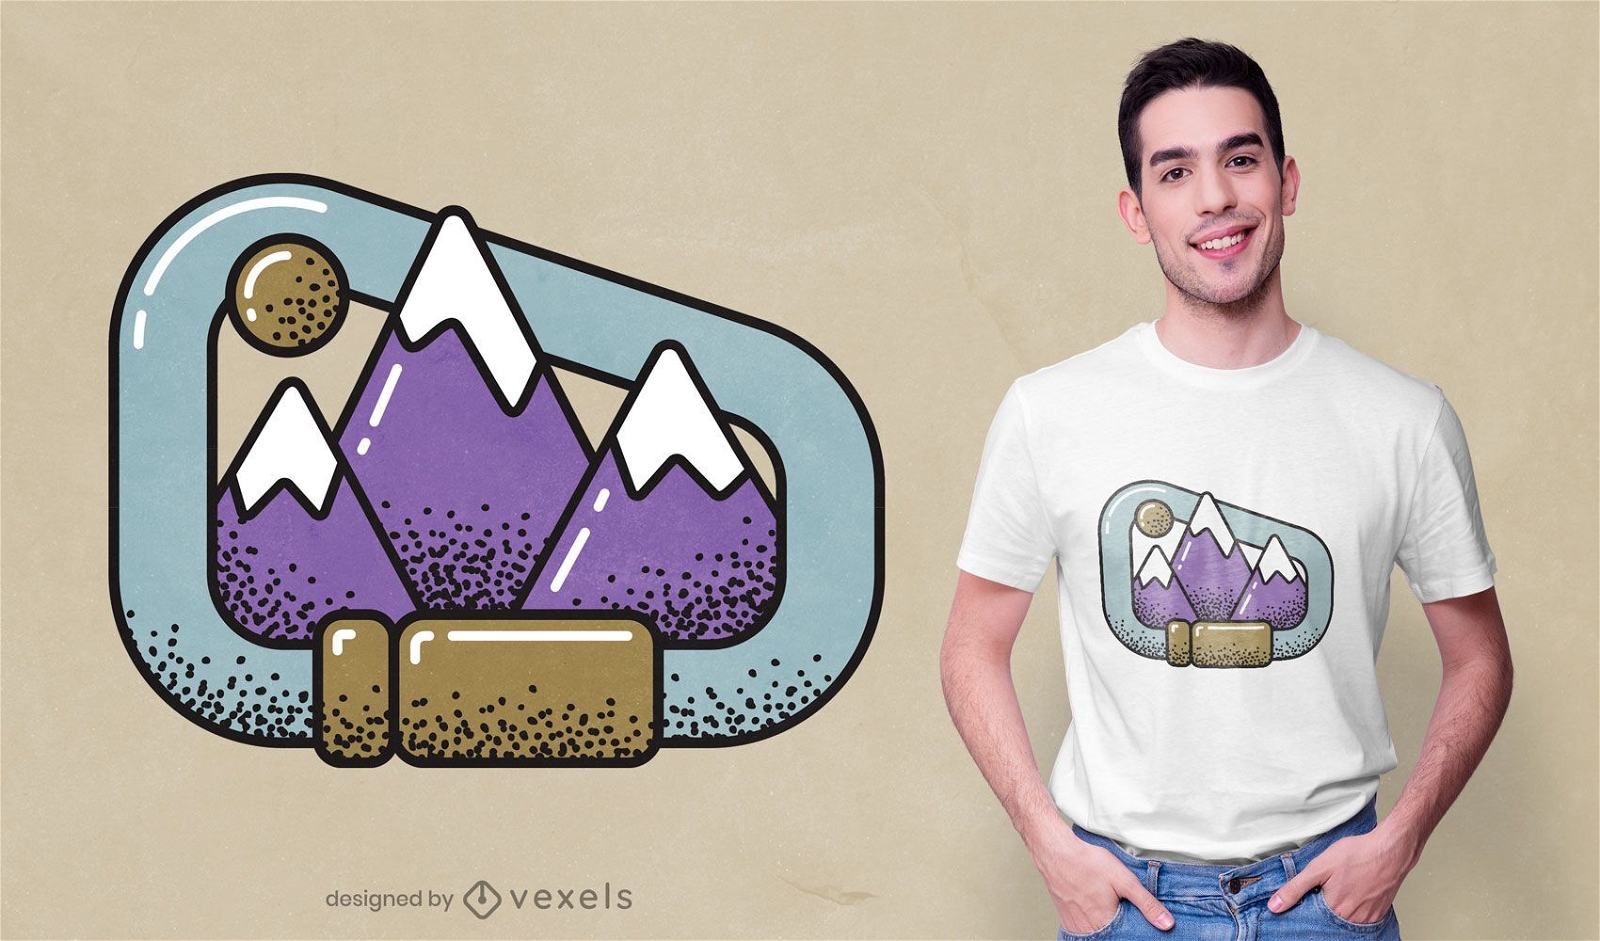 Carabiner mountains t-shirt design